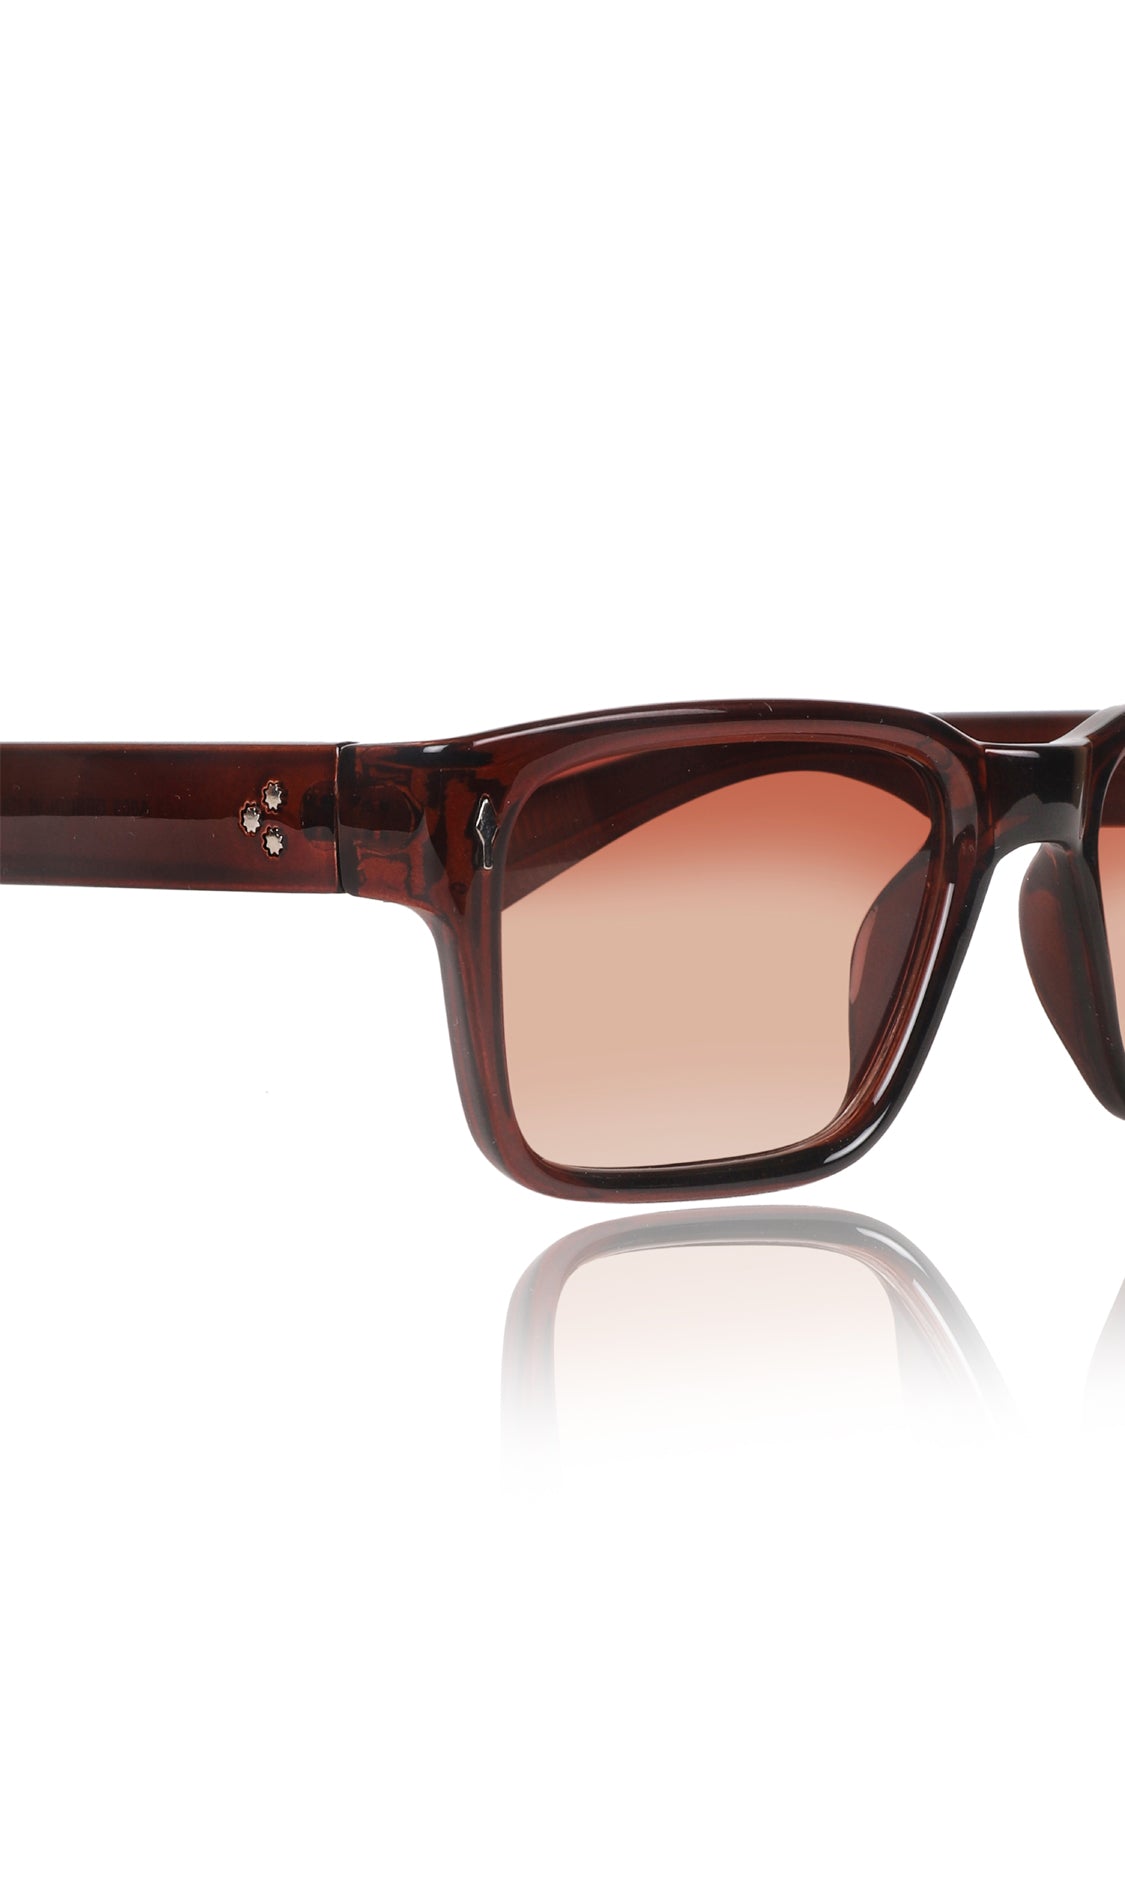 Jodykoes® Premium Series Rectangle UV Protection Sunglasses | Fashionable Sun Shades Comfortable Eyewear Eyeglasses for Men and Women (Brown) - Jodykoes ®